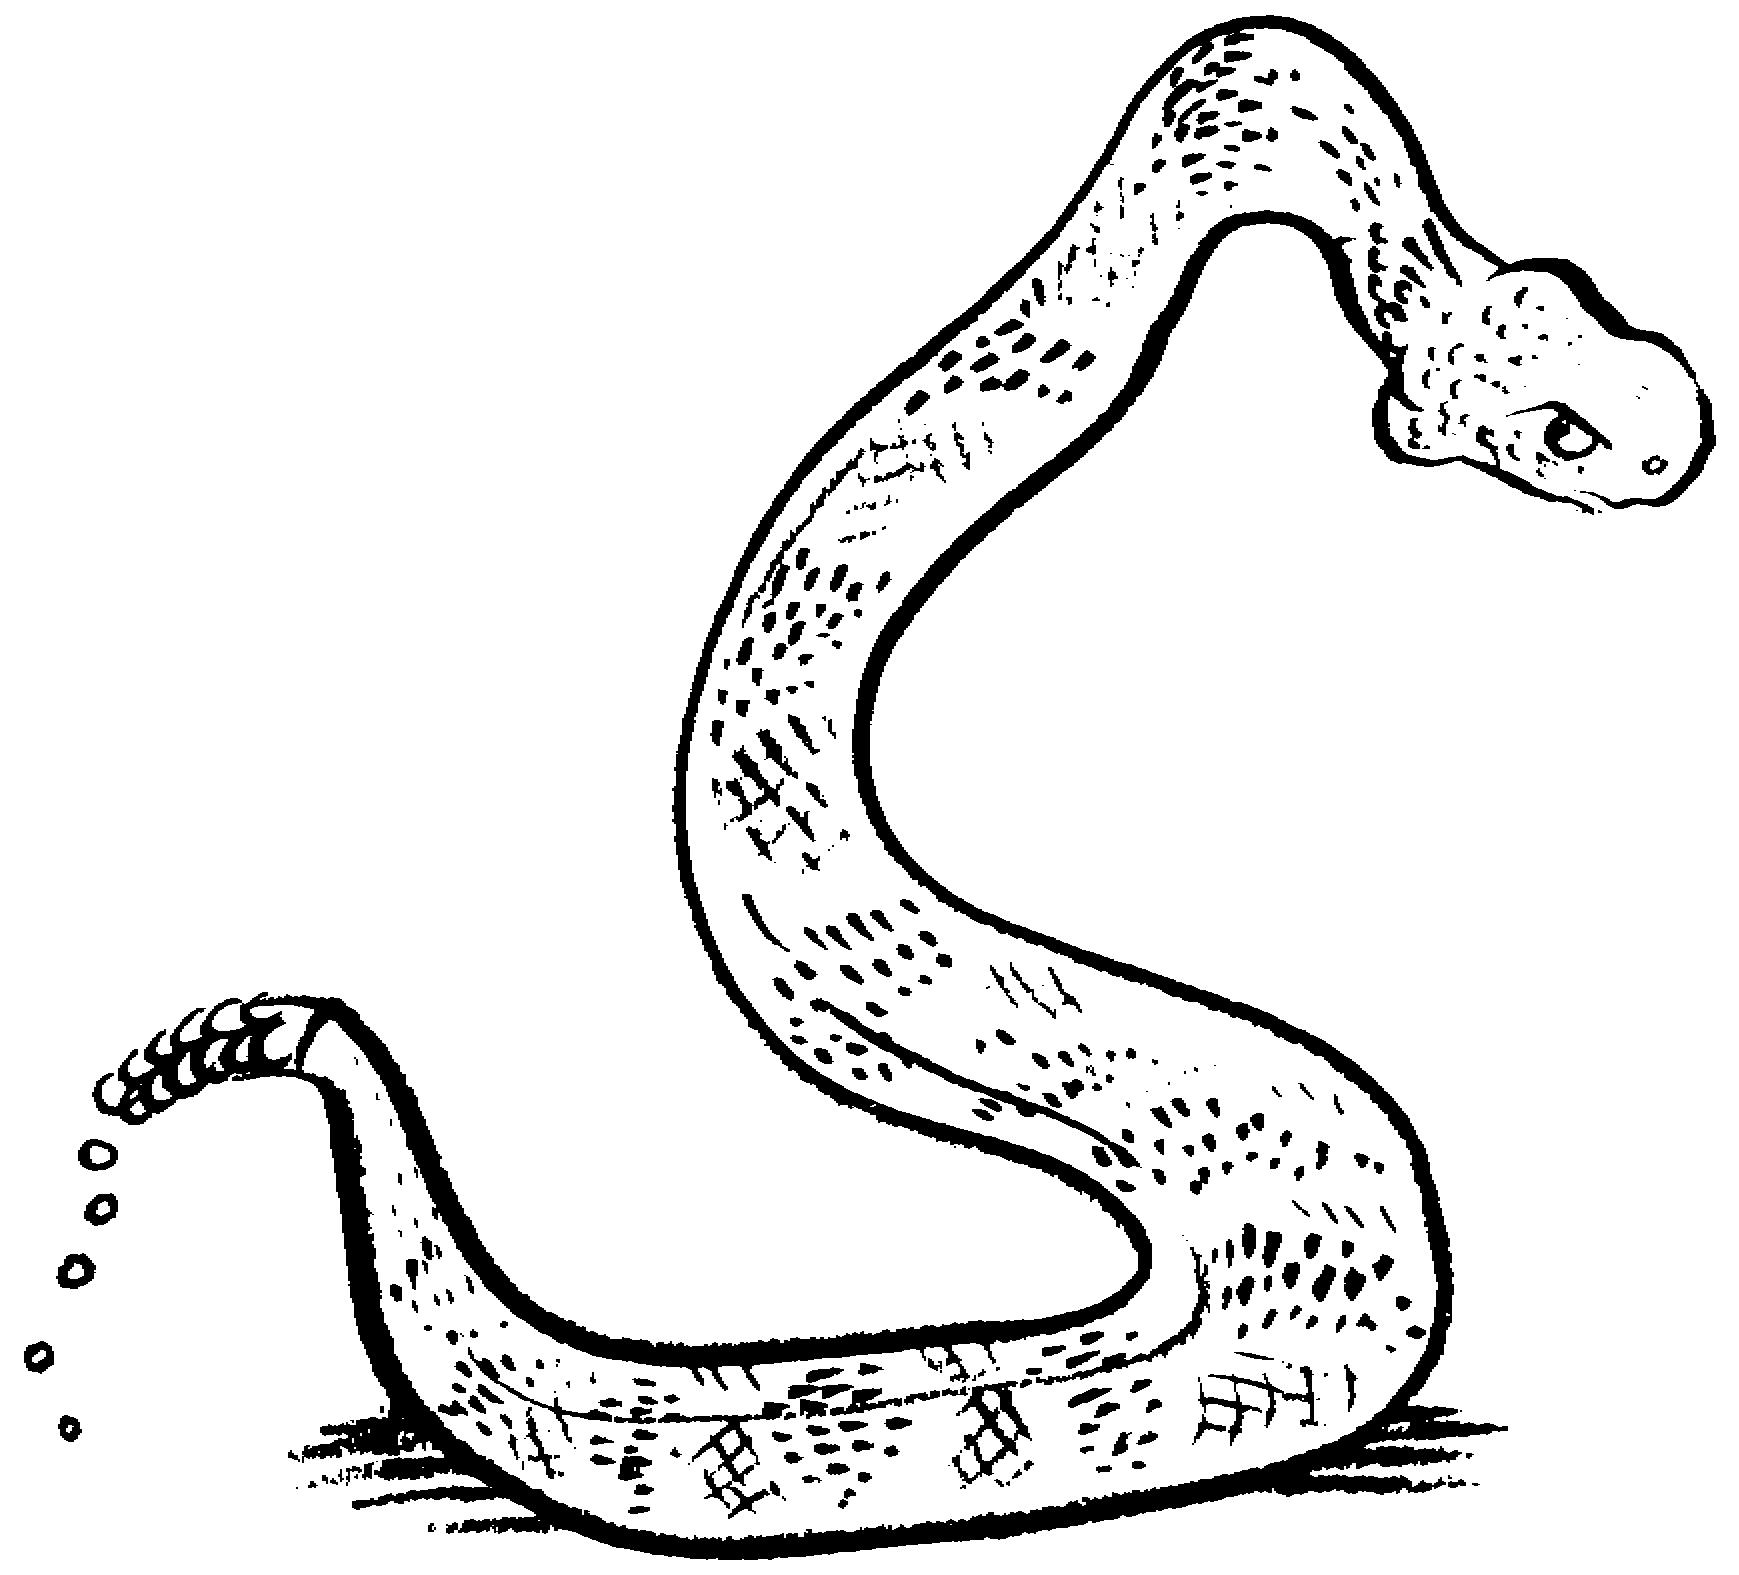 How To Draw A Cute Cartoon Snake | Art For Kids Hub